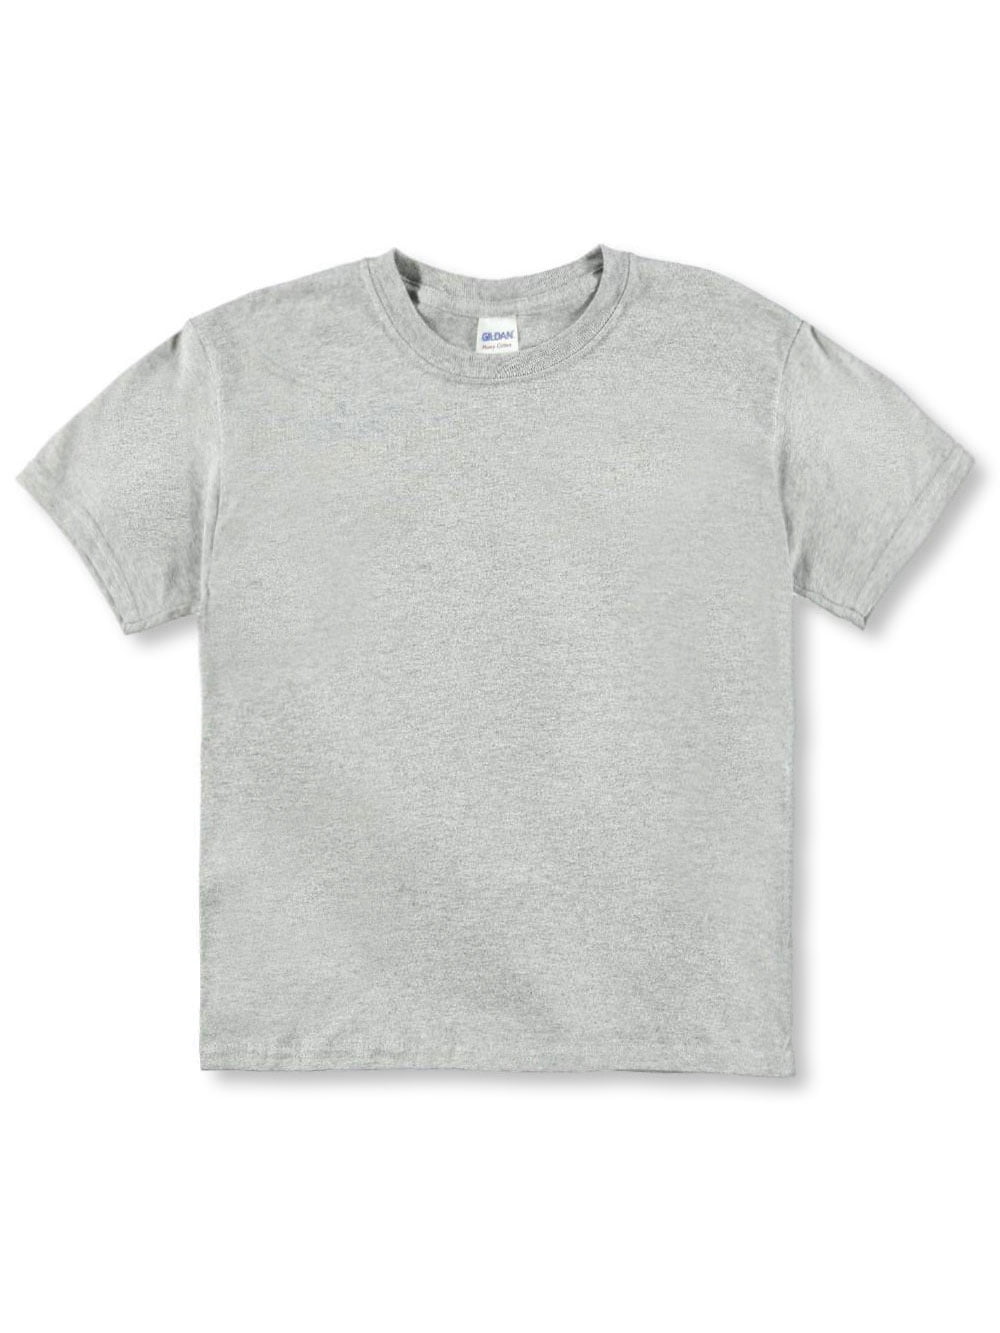 Gildan Unisex Youth T-Shirt - sport gray, m/10-12 (Big Girls)